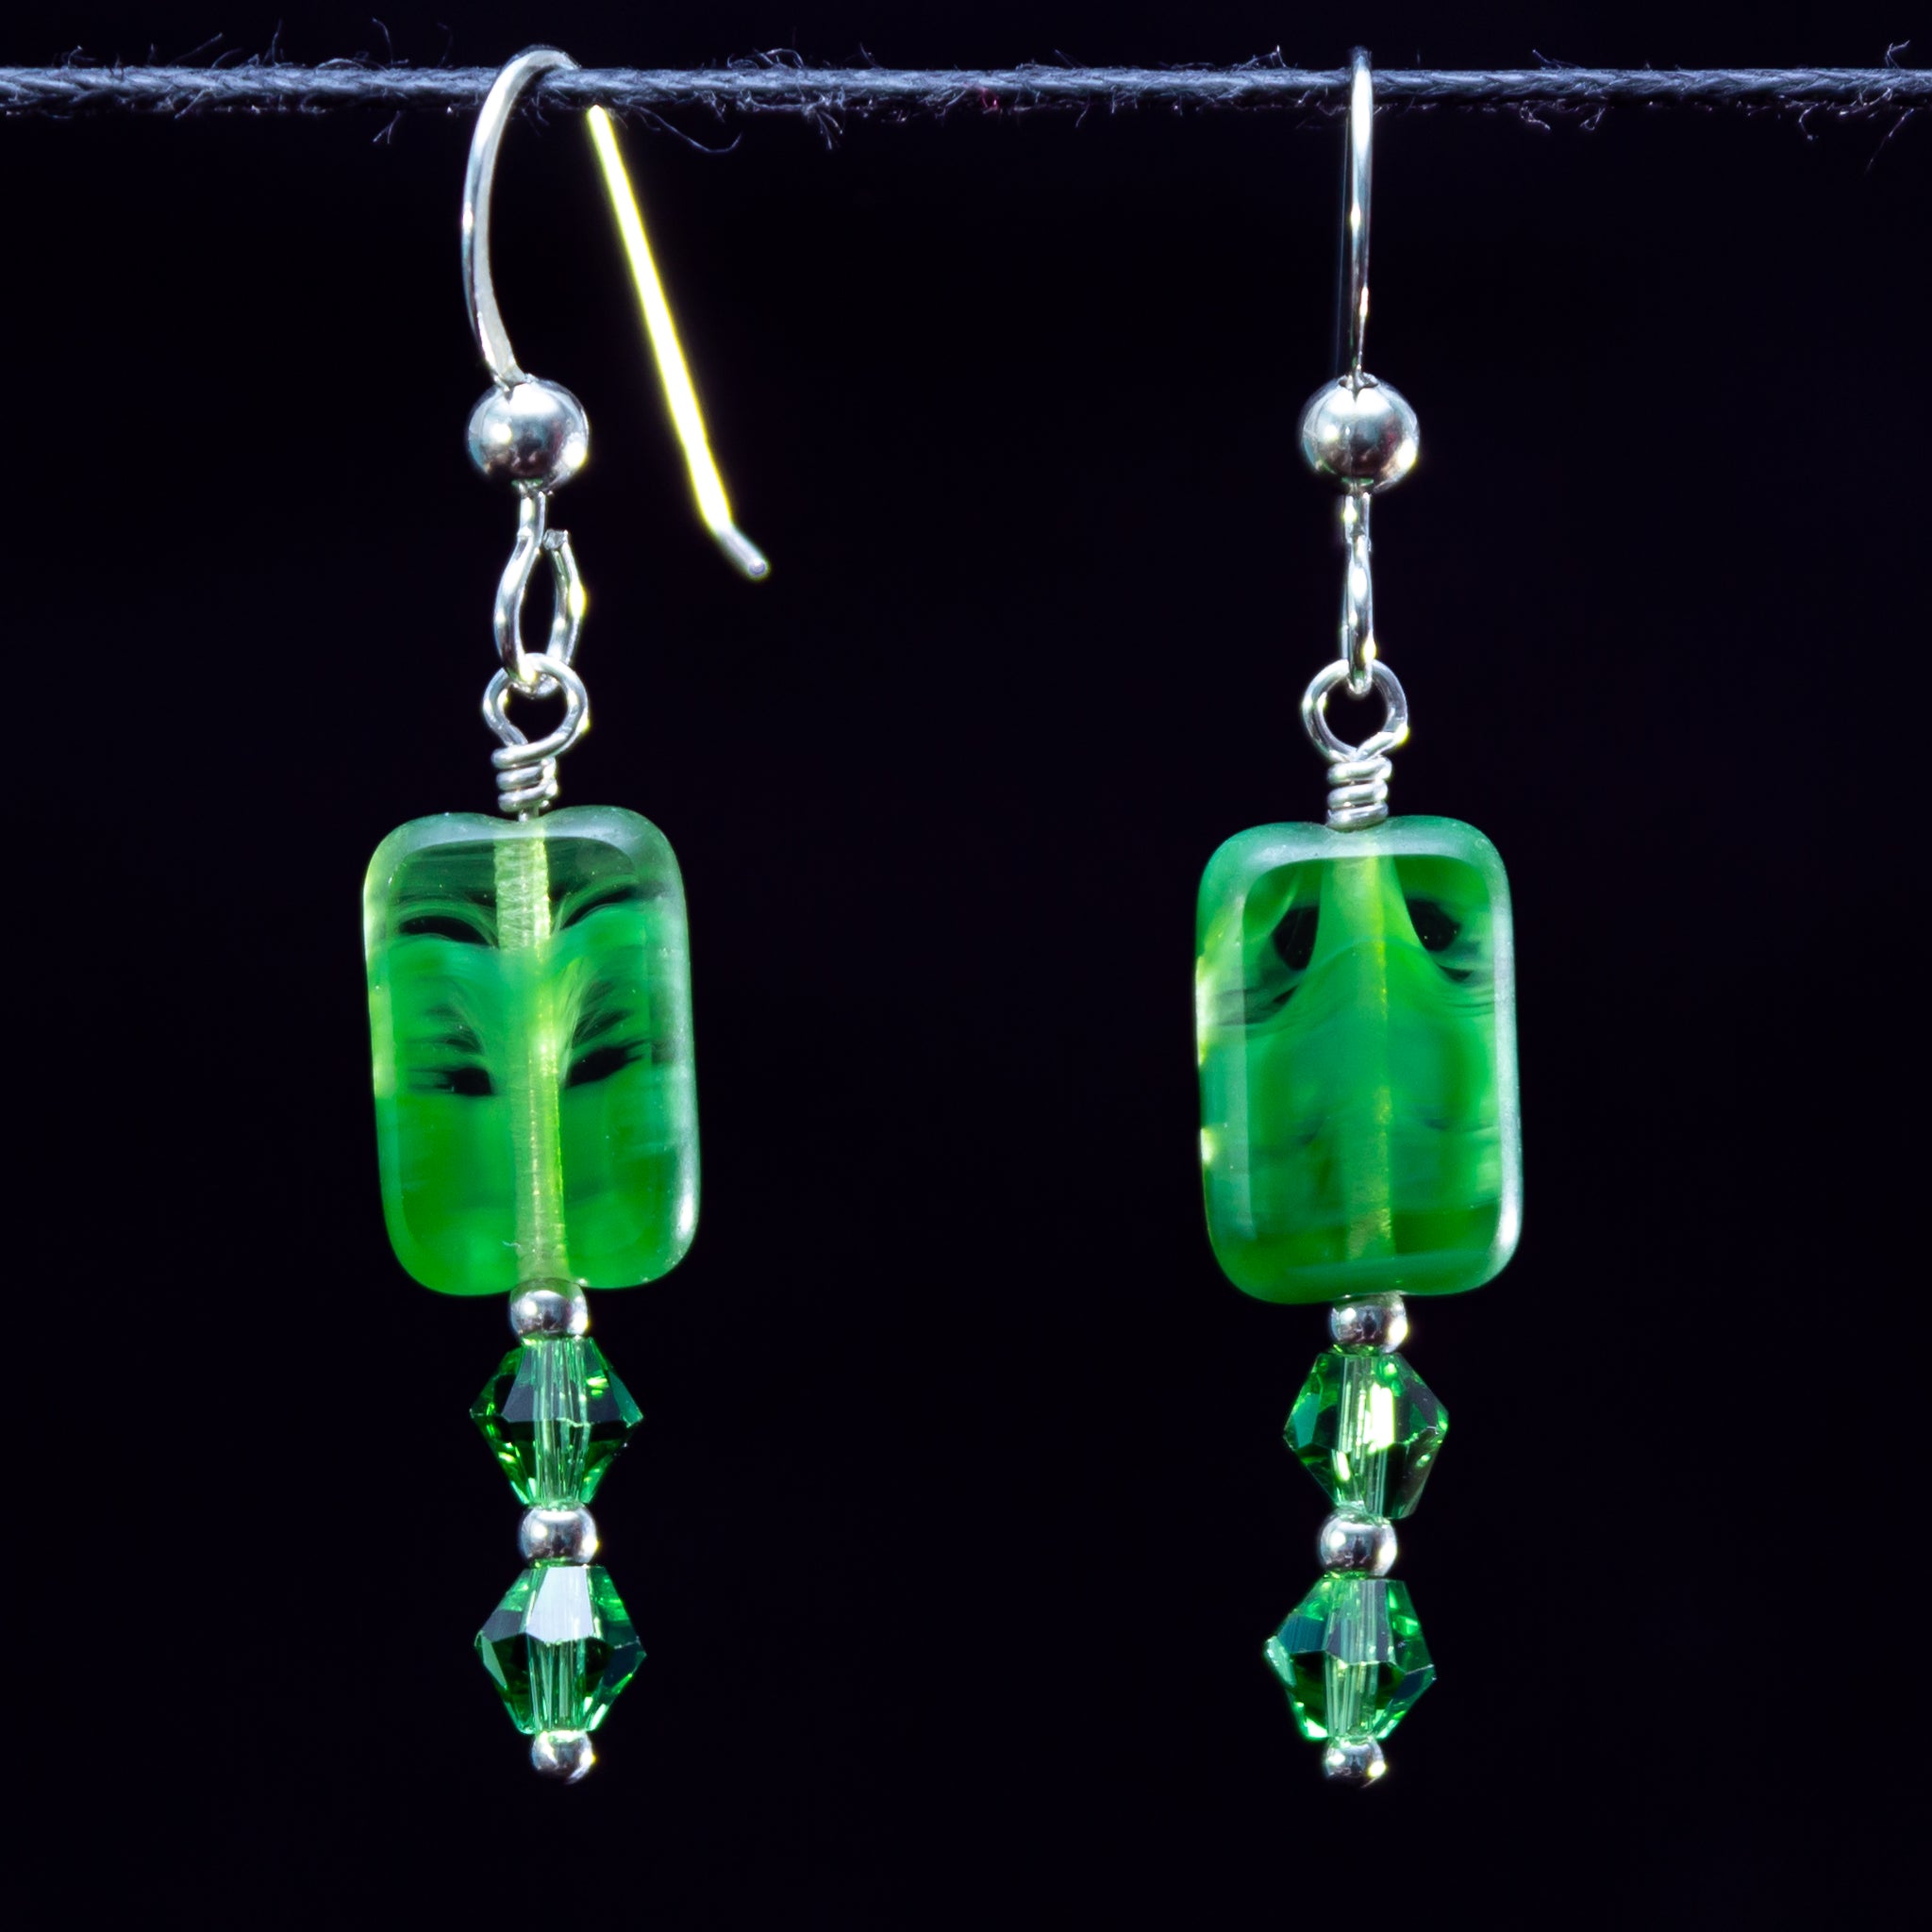 Green glass tablet earrings #1